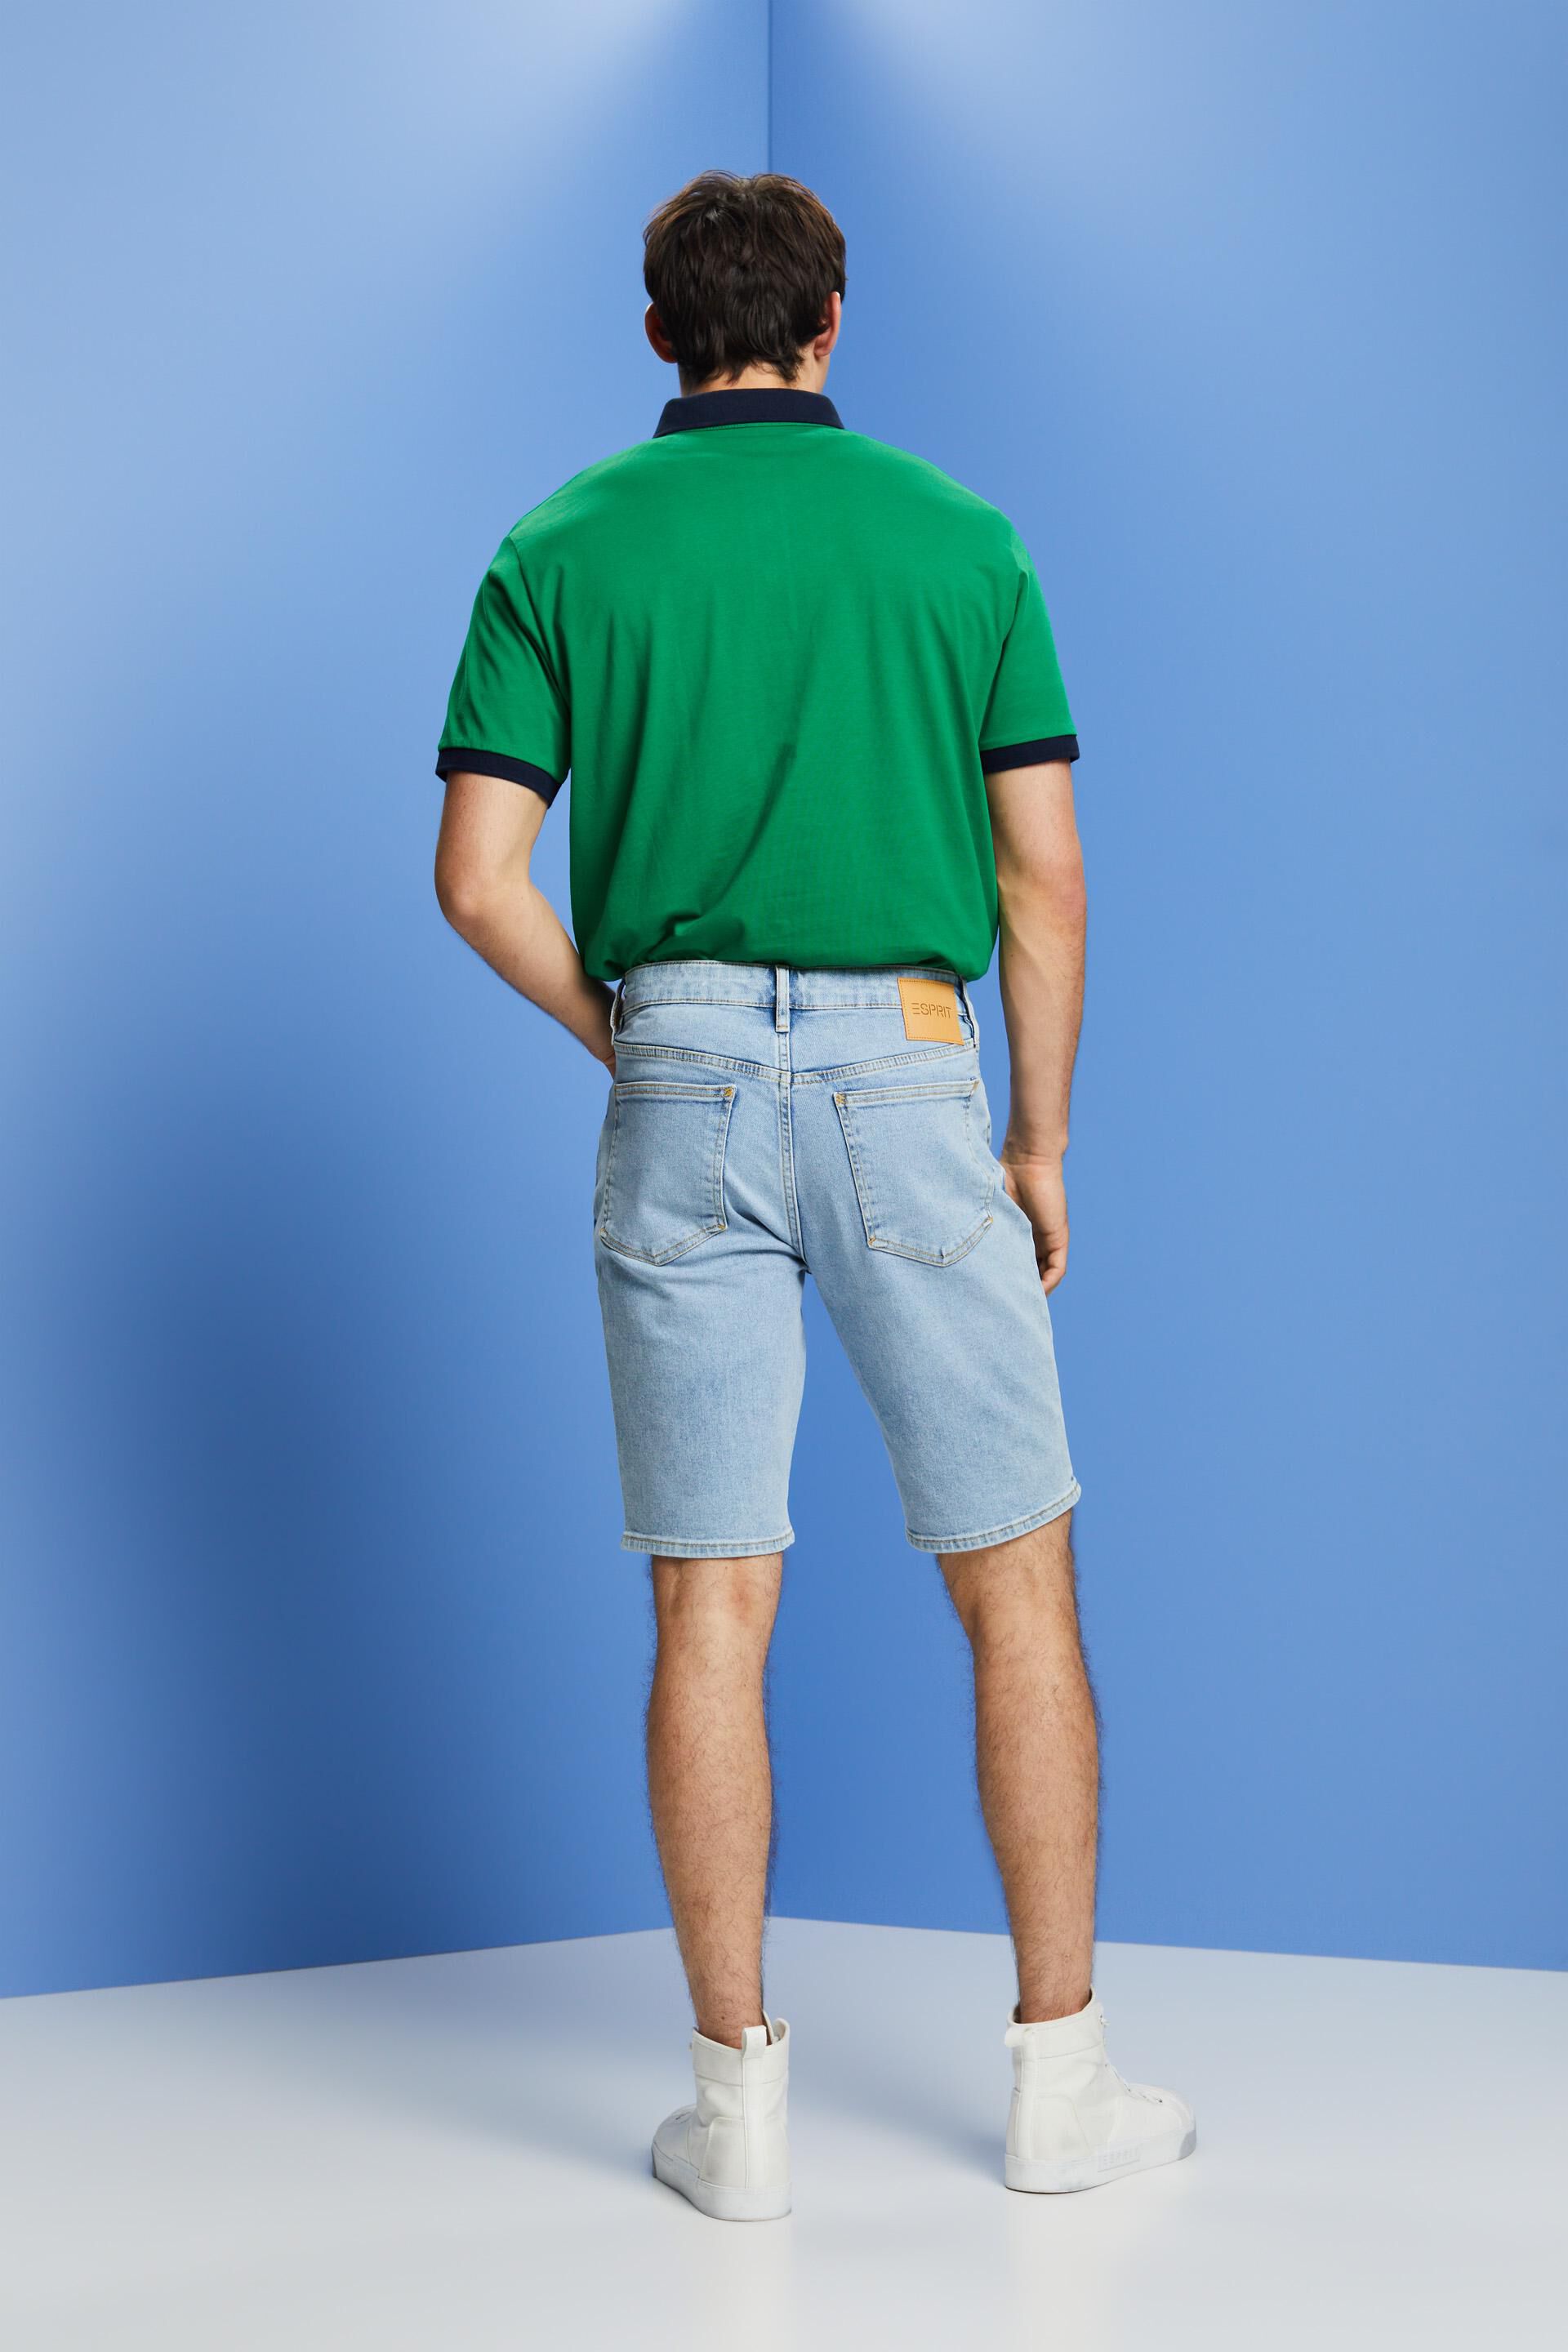 LOEWE + Paula's Ibiza Straight-Leg Frayed Denim Shorts for Men | MR PORTER